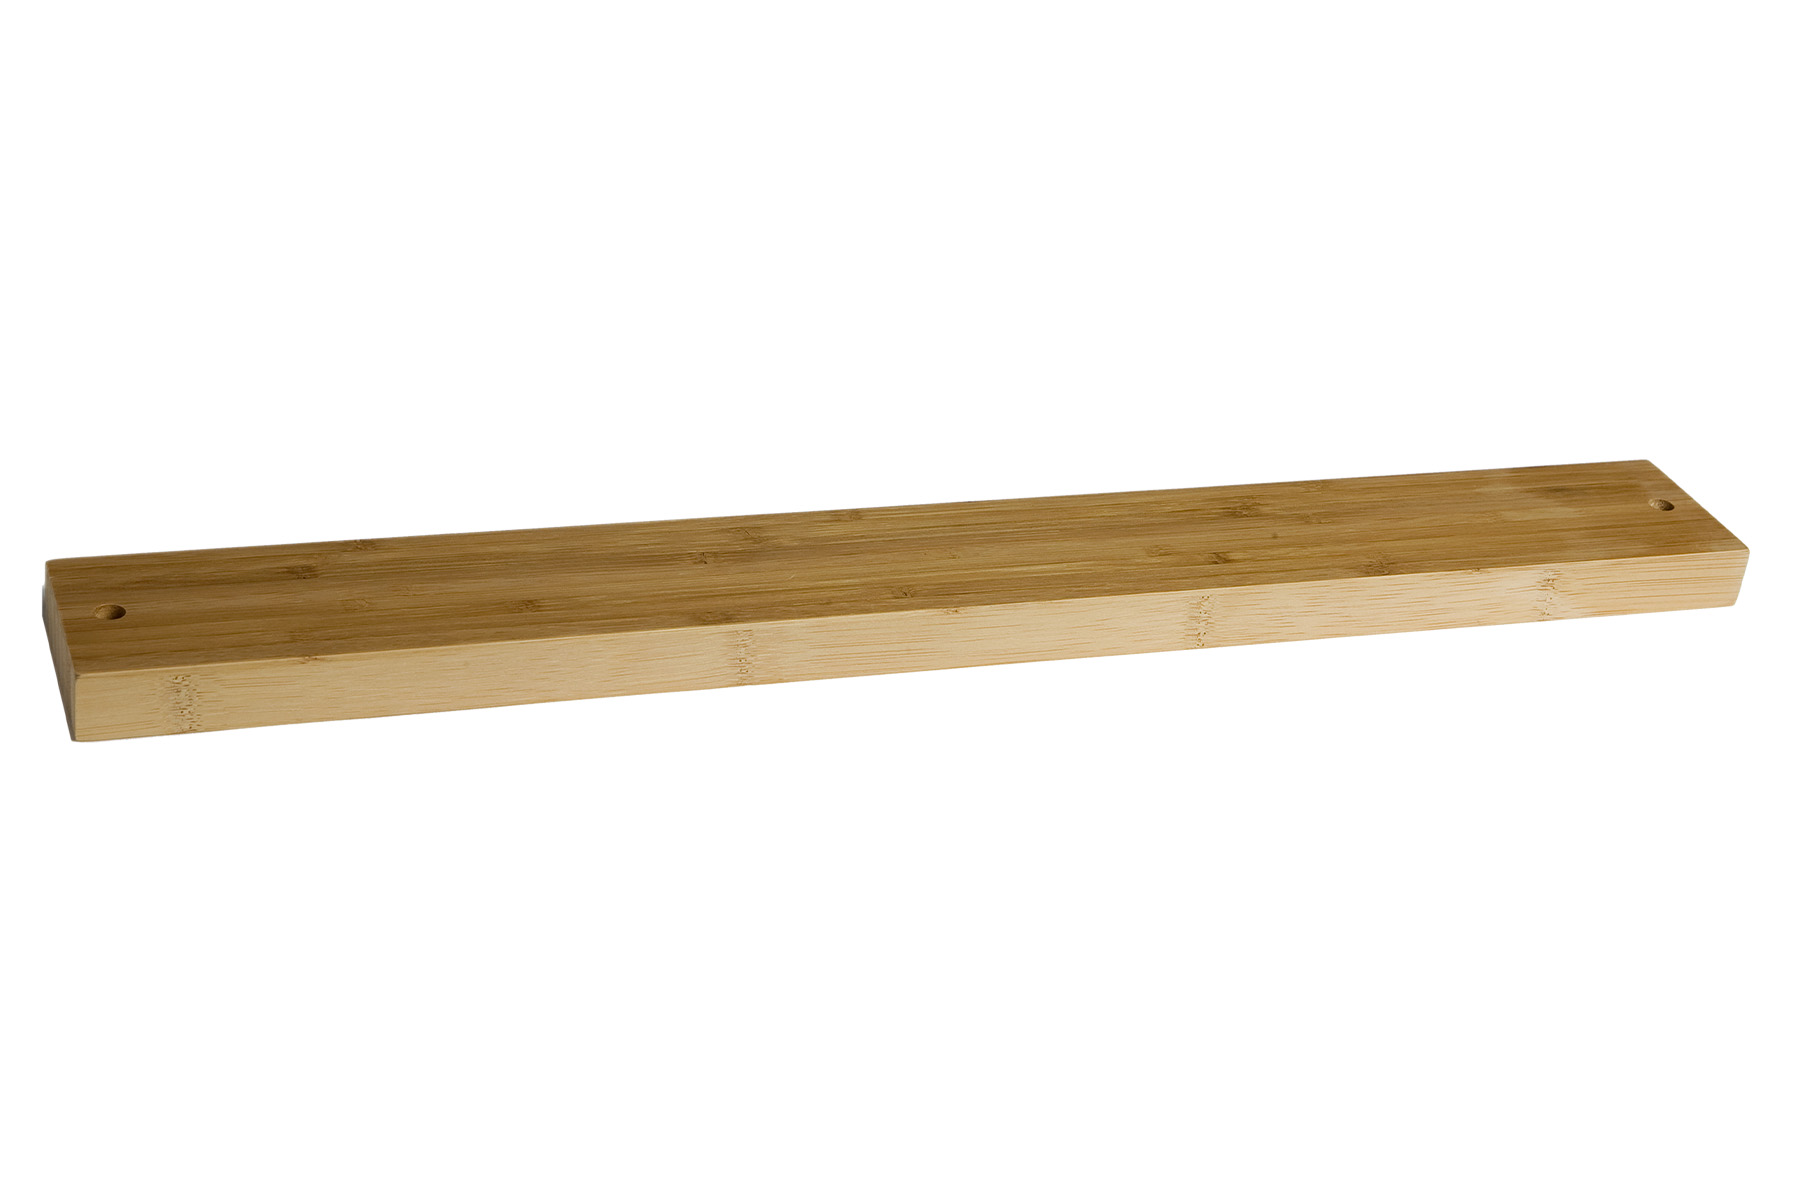 Barre aimantée Yaxell - Bambou 45 cm